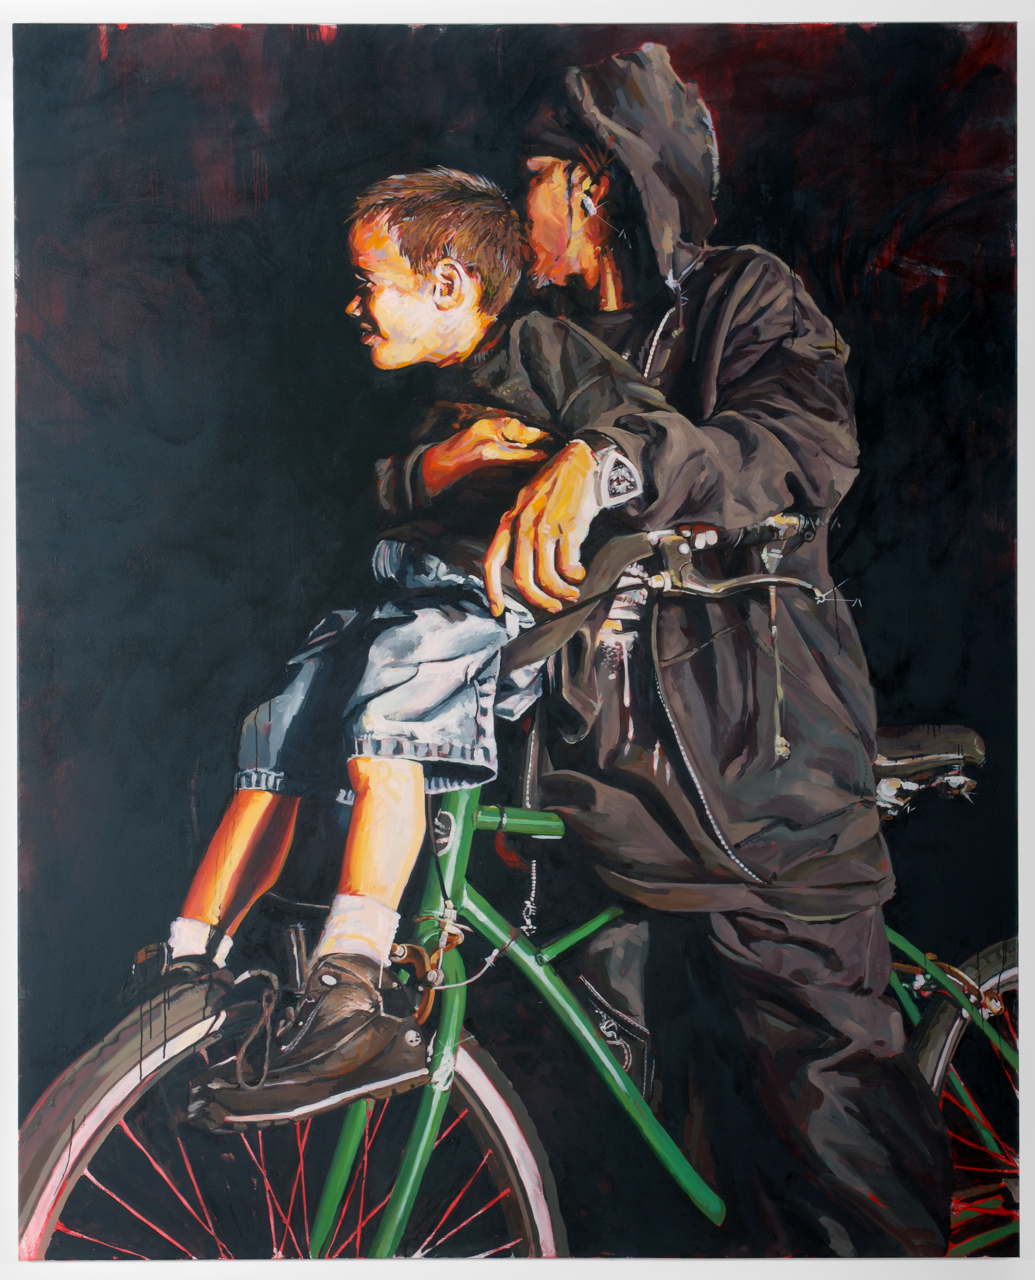  MICHAEL VASQUEZ  "The Neighborhood Tour" 2006  mixed media on canvas  96 x 78" 